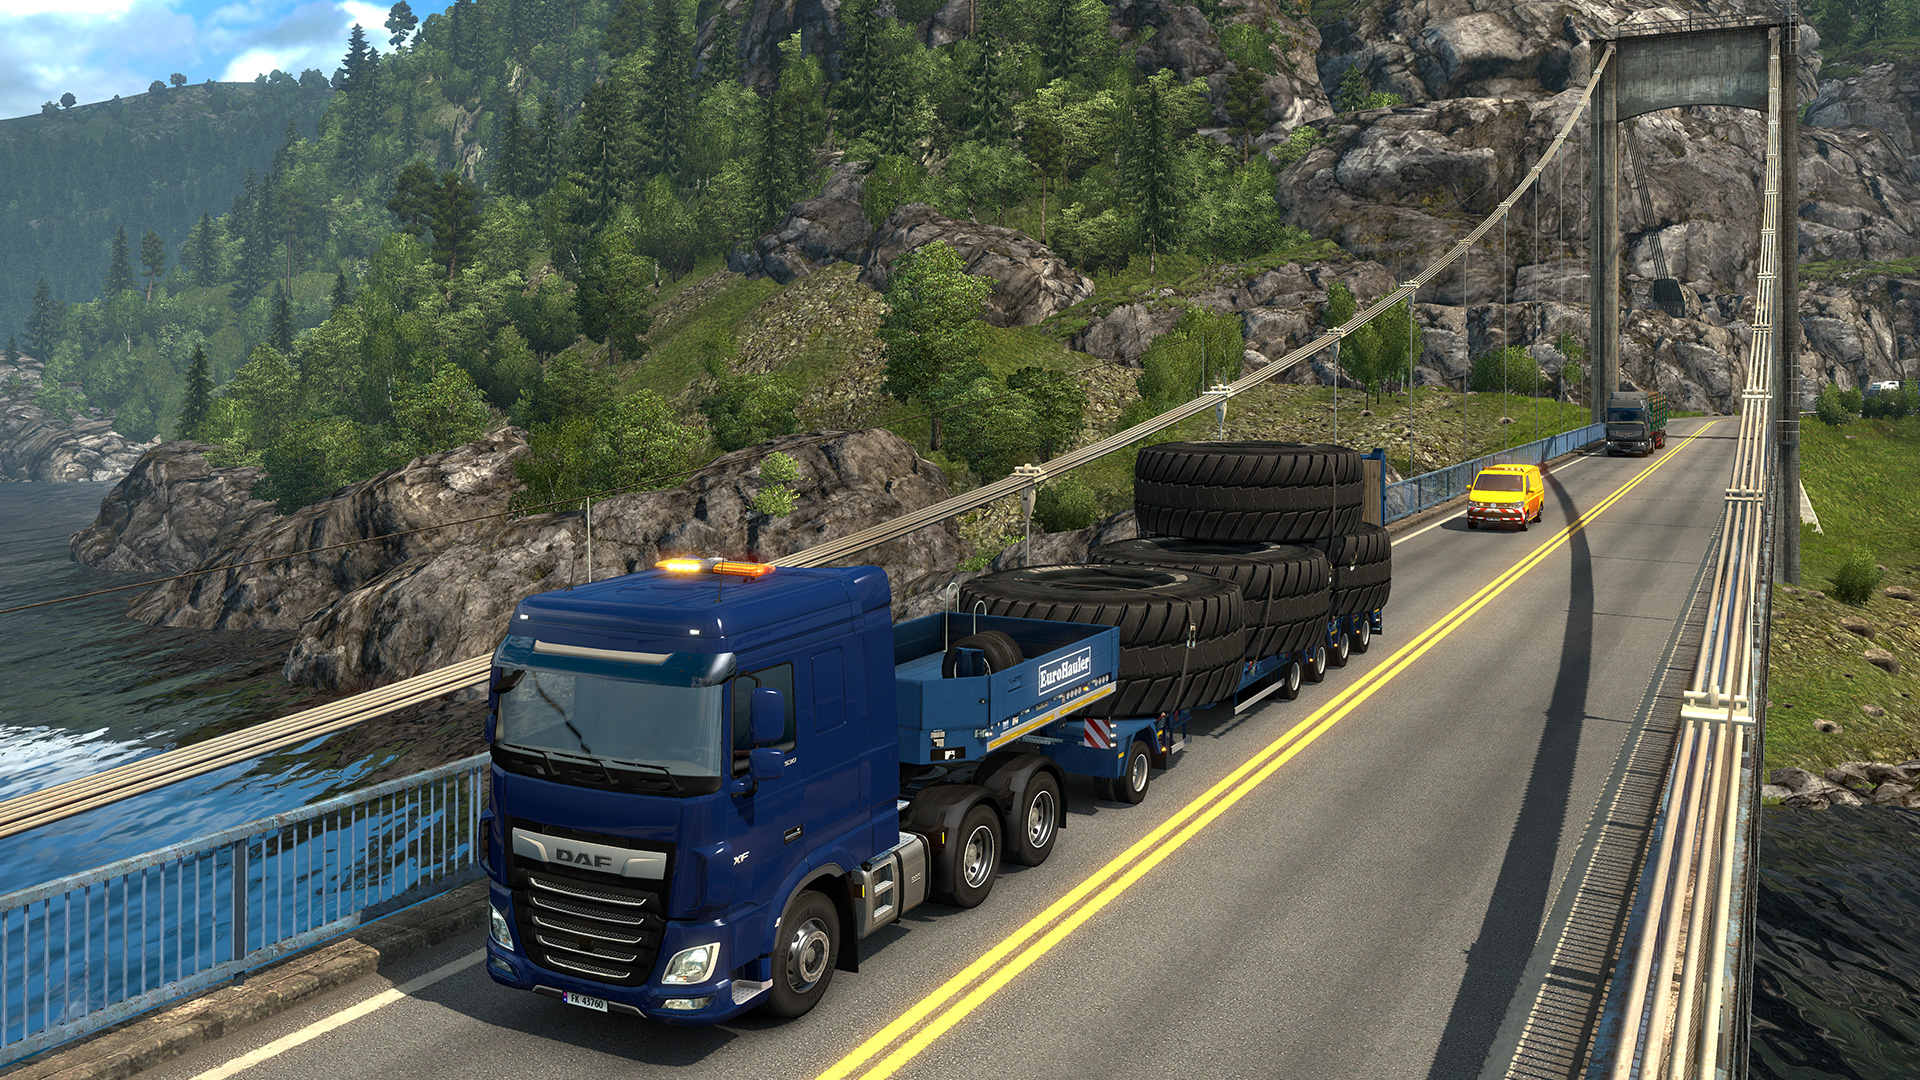 euro truck simulator 2 pc download